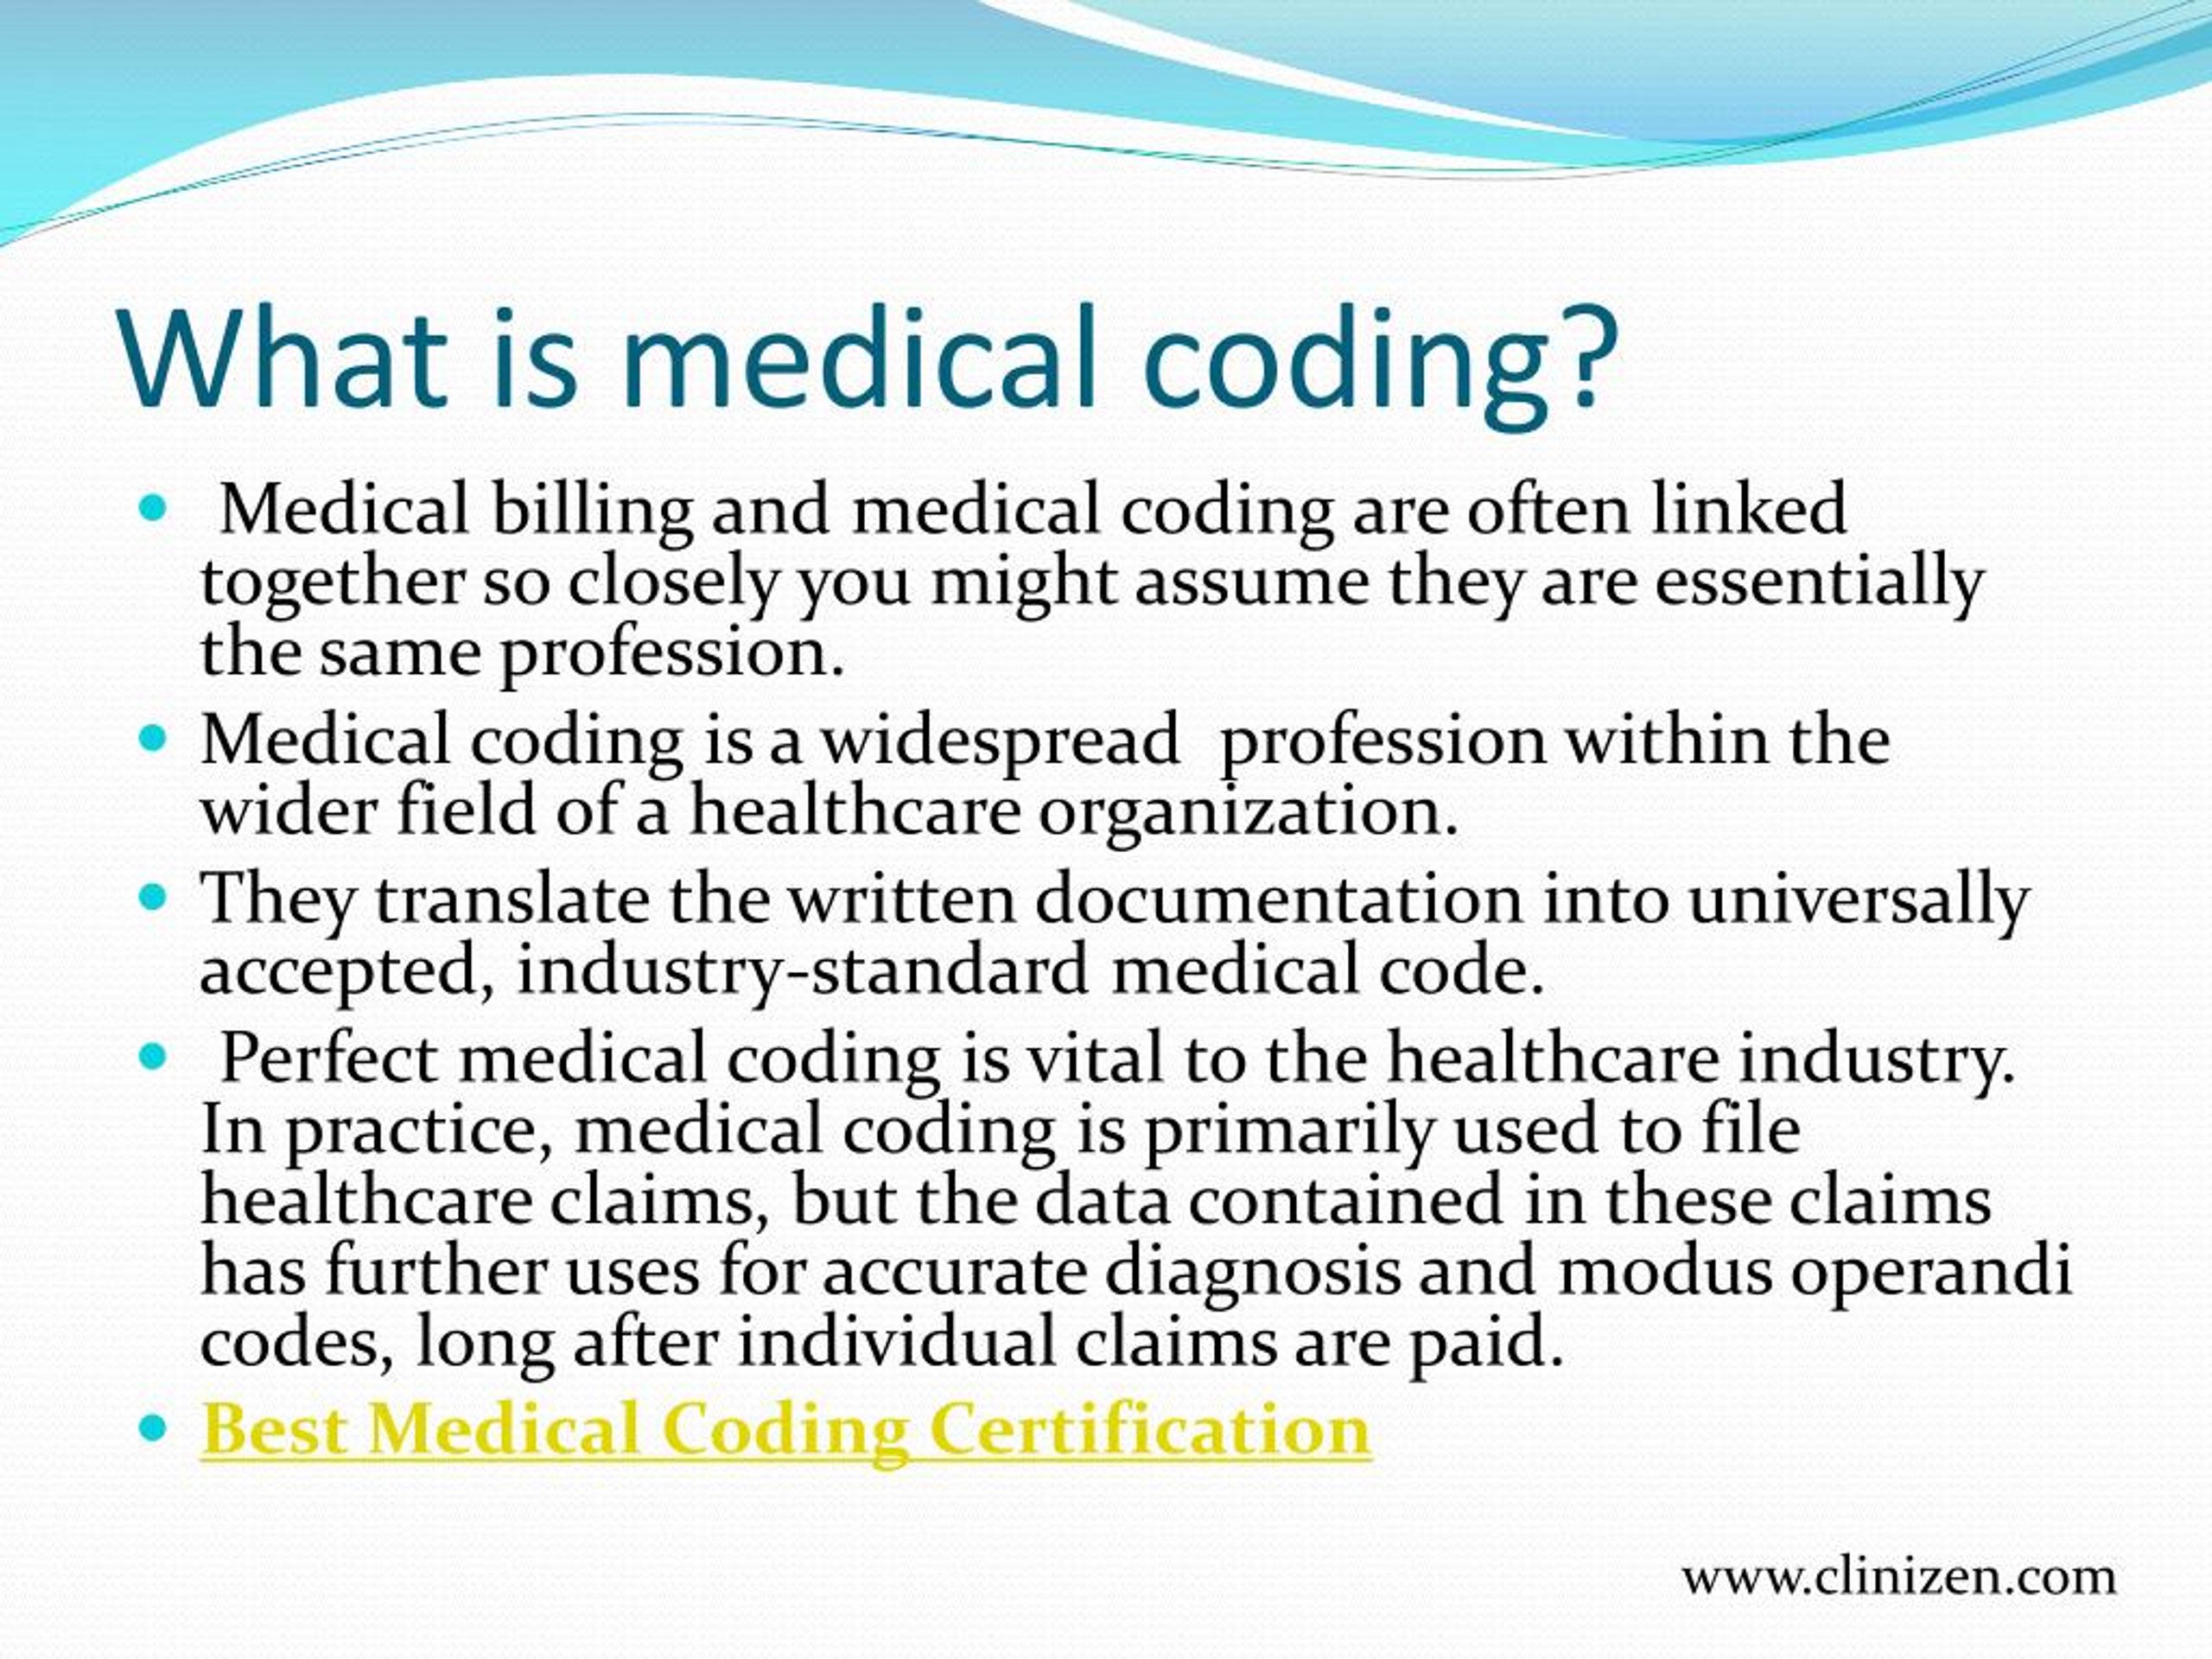 medical coding training ppt presentation